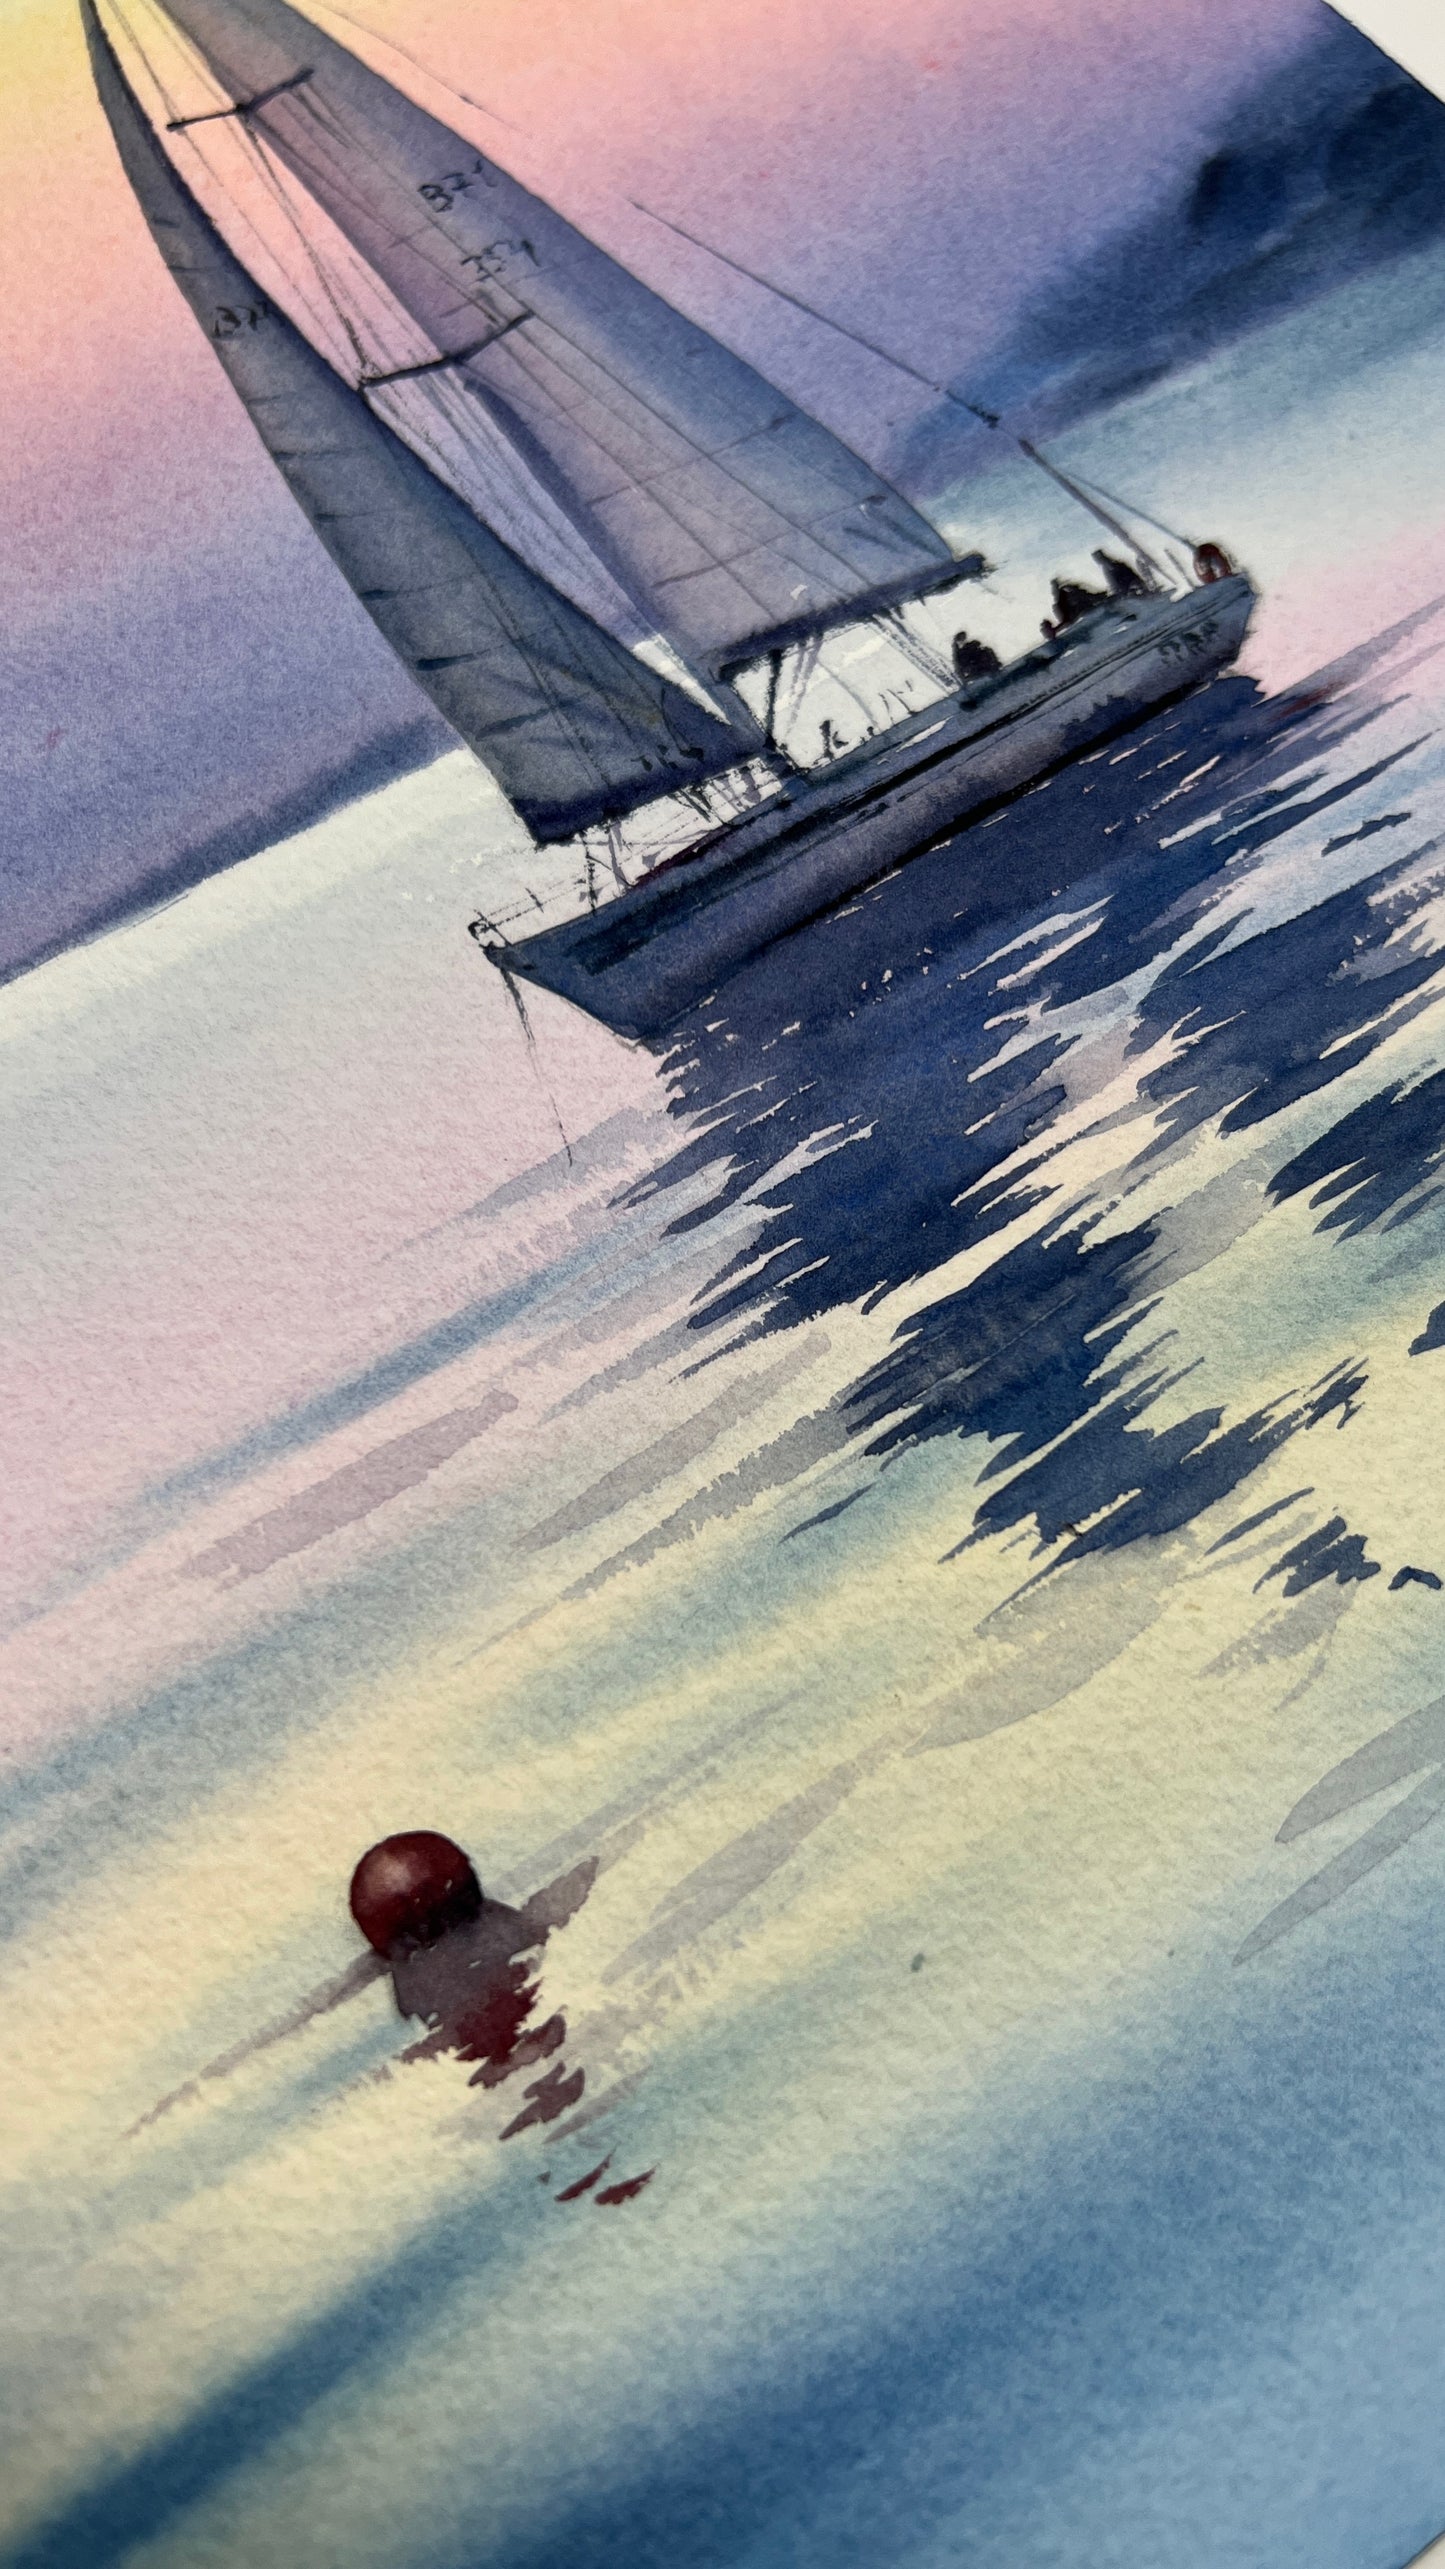 Ocean Beach Yacht Painting Watercolor Original, Sailboat Art, Nautical Wall Decor, Coastal Living Room Decor, Gift